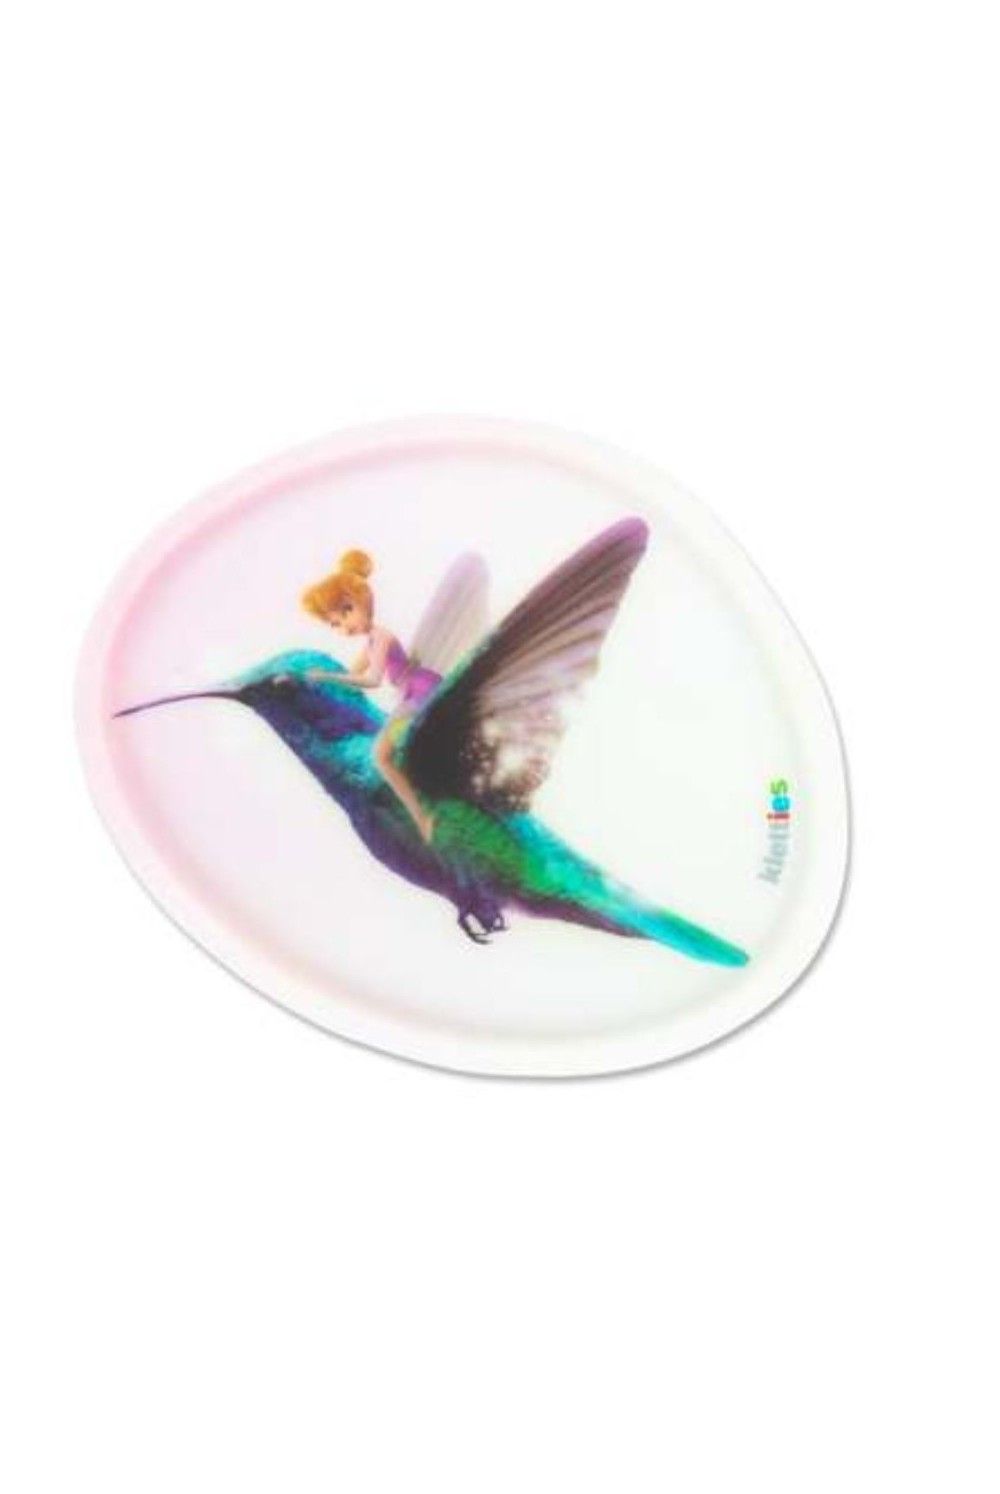 Reflektier-Kletties ergobag Kolibri Prinzessin